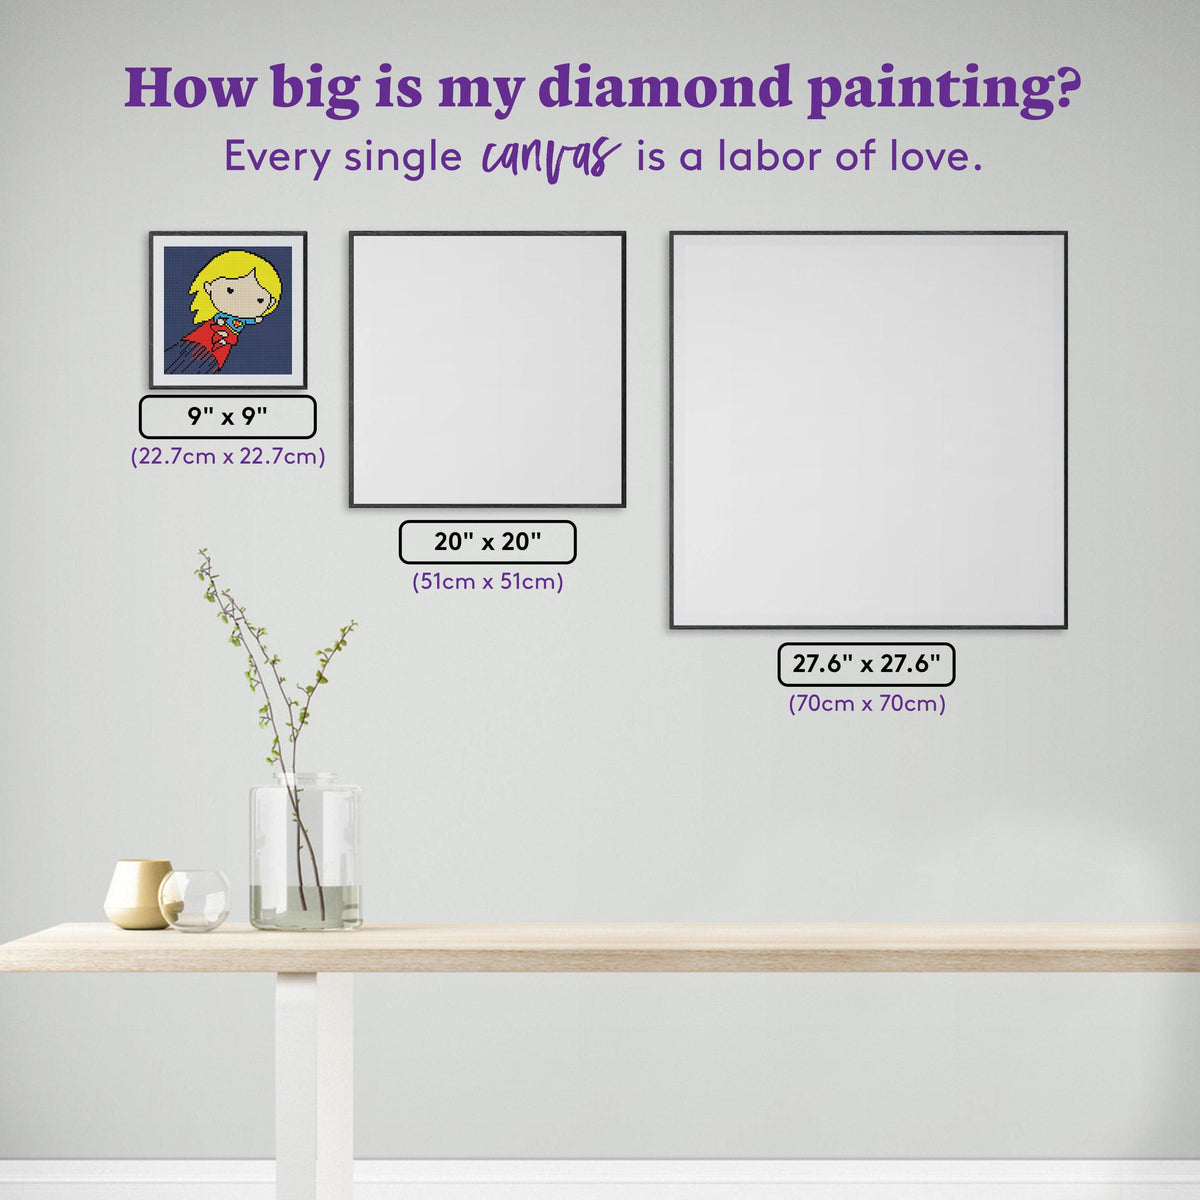 Diamond Painting Supergirl Chibi 9" x 9" (22.7cm x 22.7cm) / Round With 6 Colors including 2 AB Diamonds / 6,561